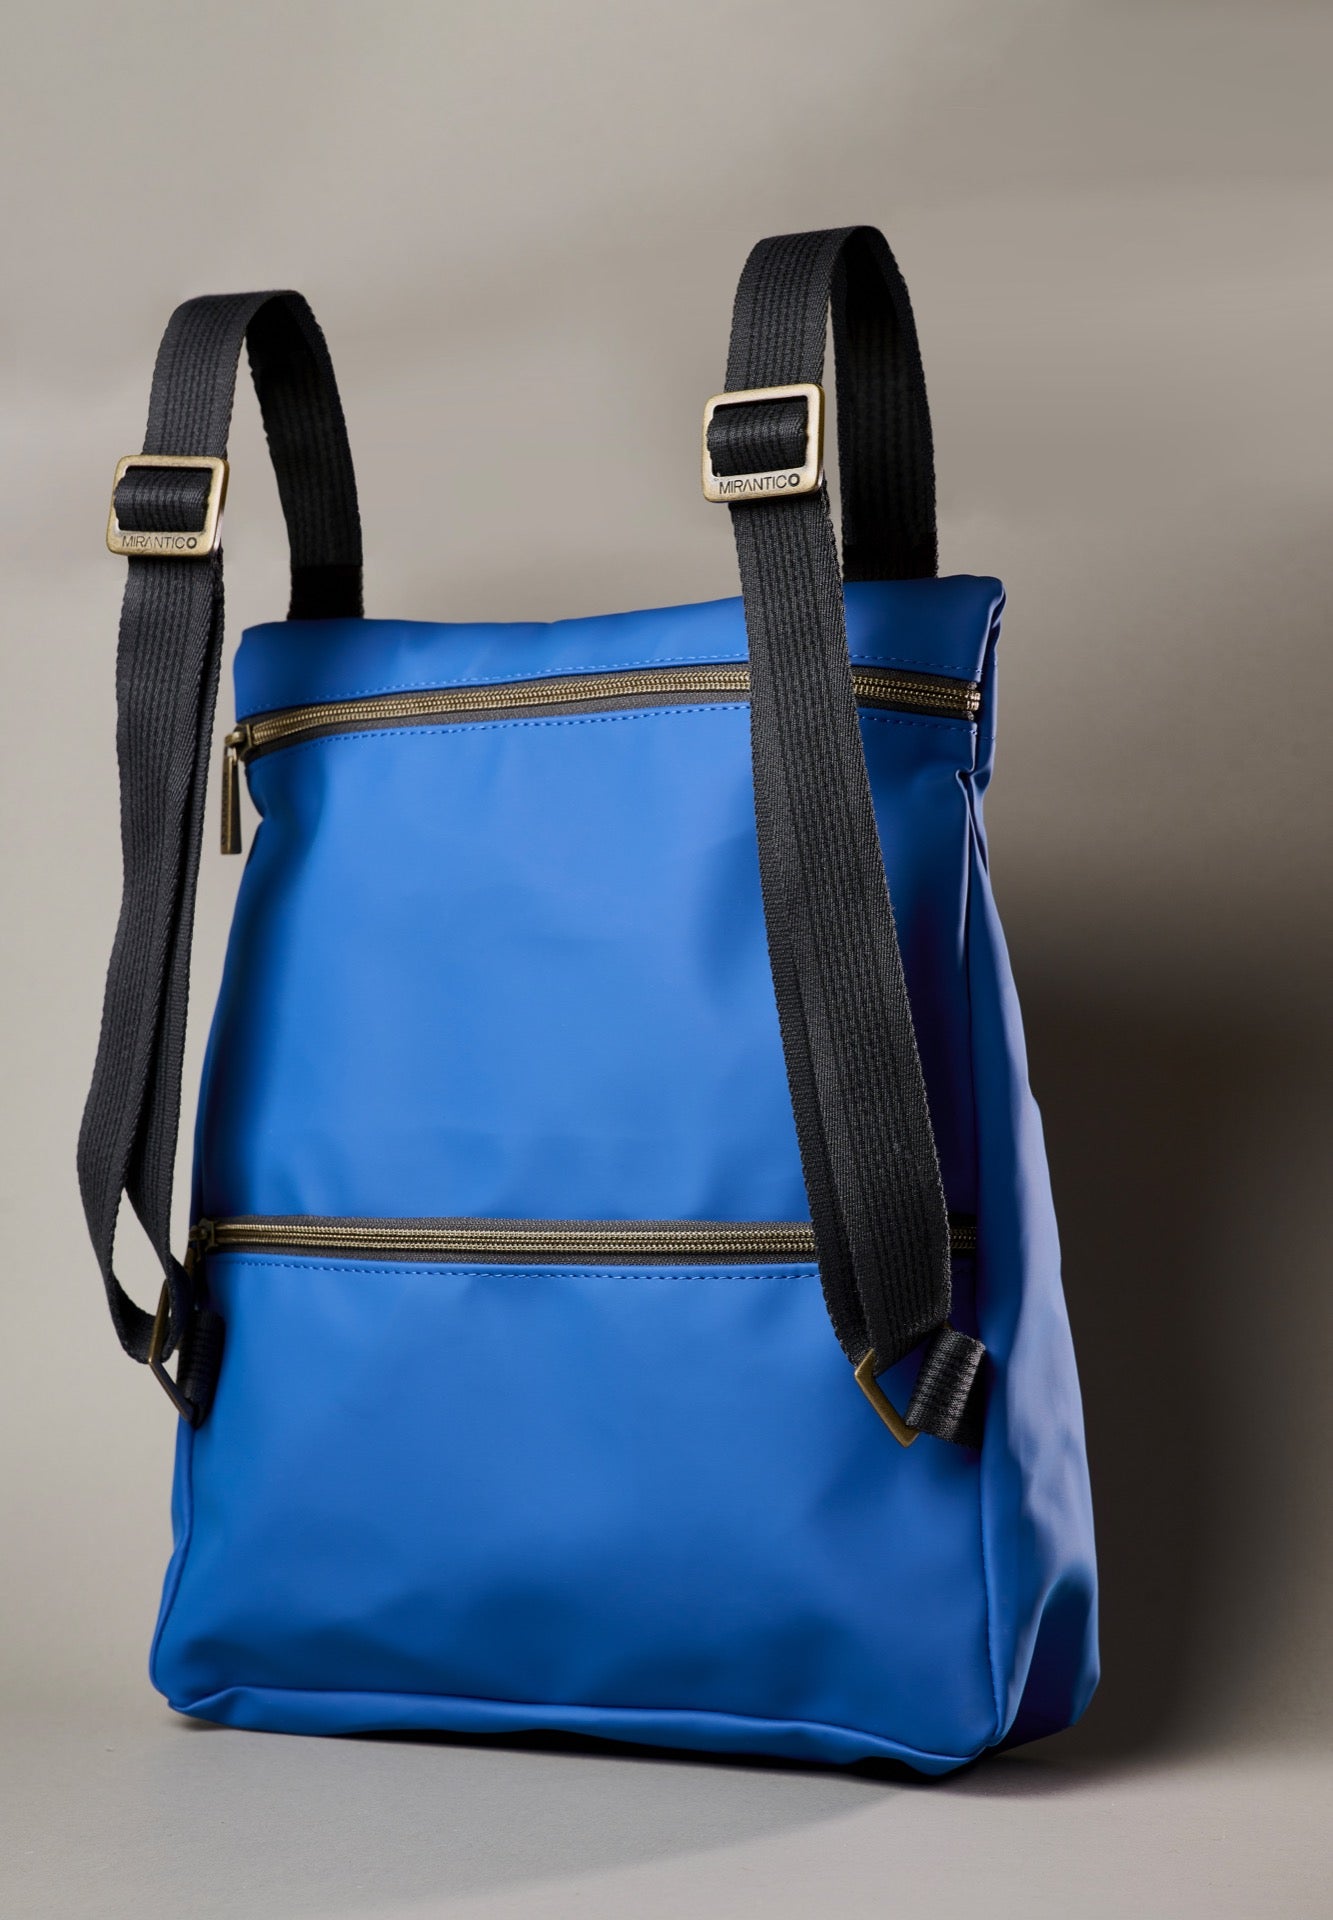 V2 x Mirantico - Royal Blue Memo Bag Backpack with Pocket in Comics fabric